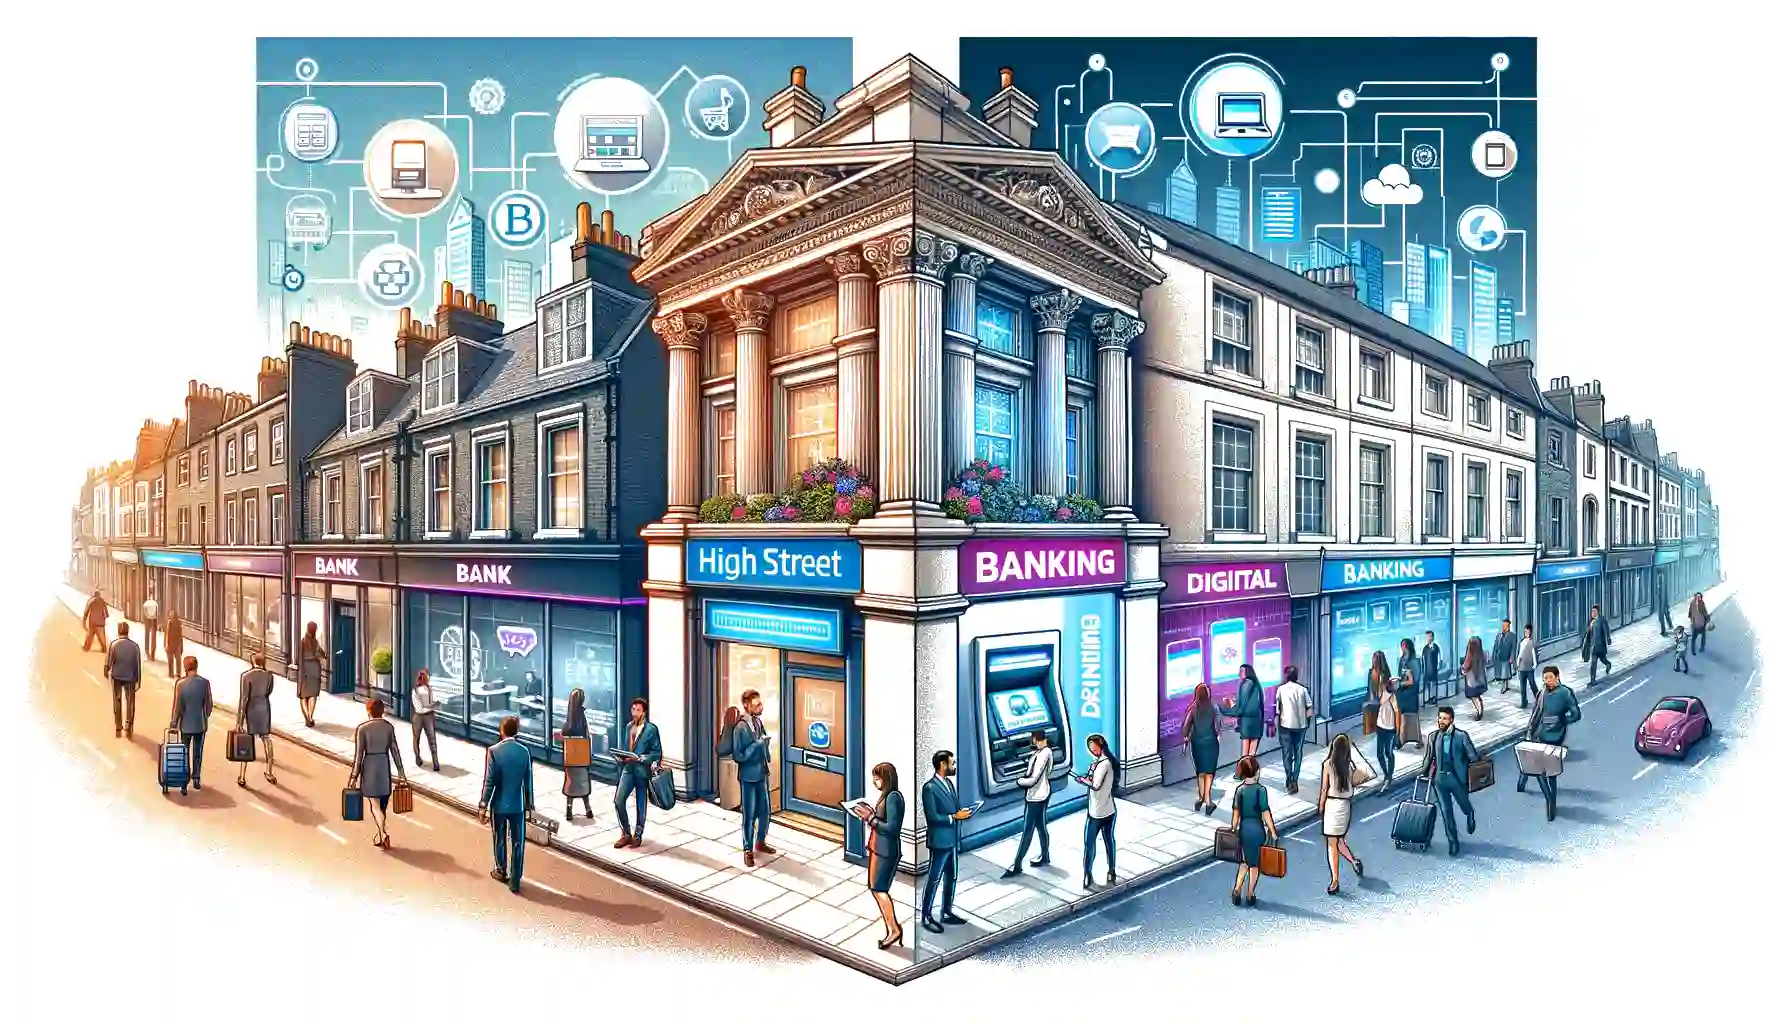 Highstreet vs digital banking